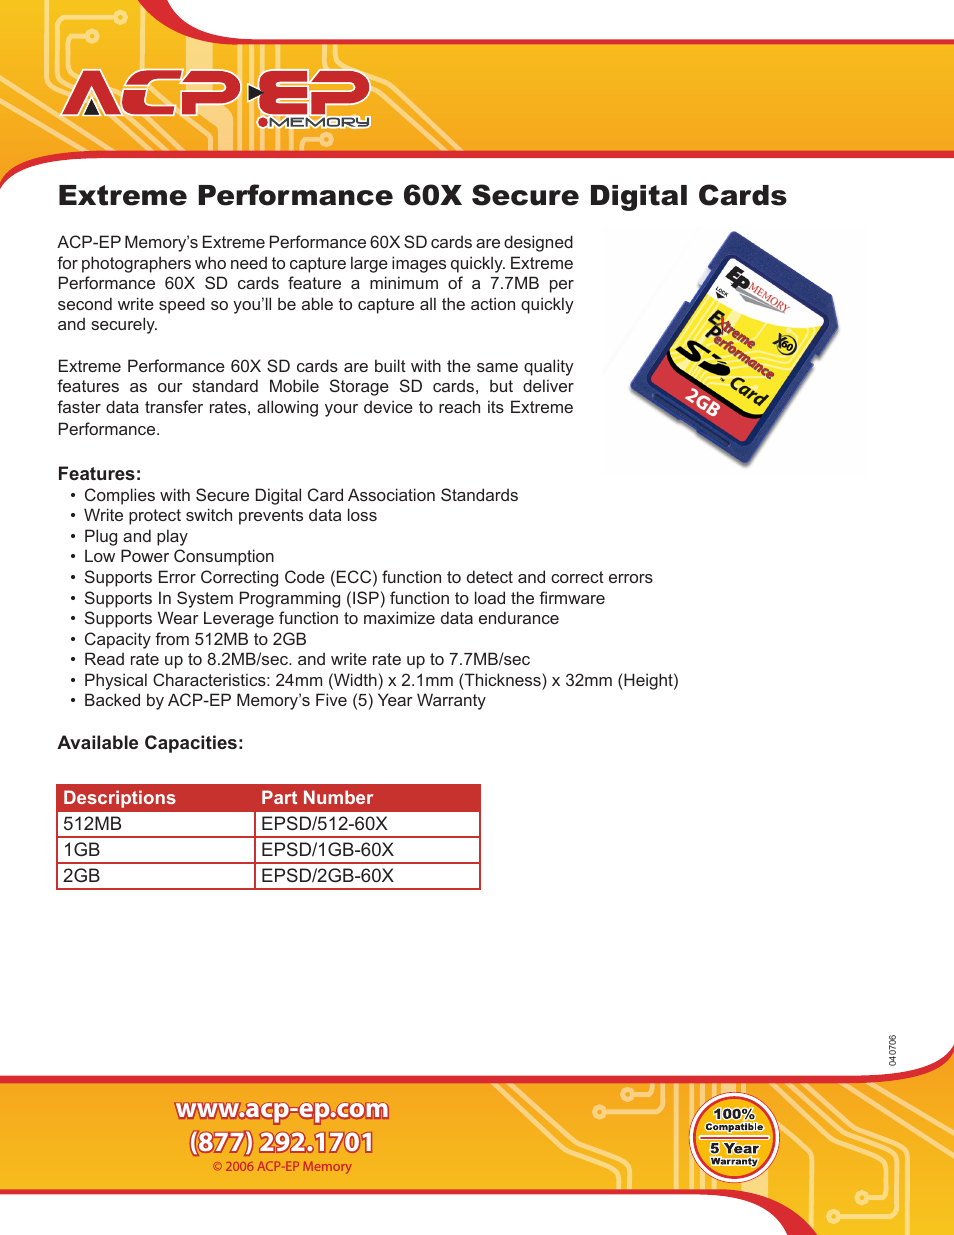 Extreme Performance EPSD/2GB-60X